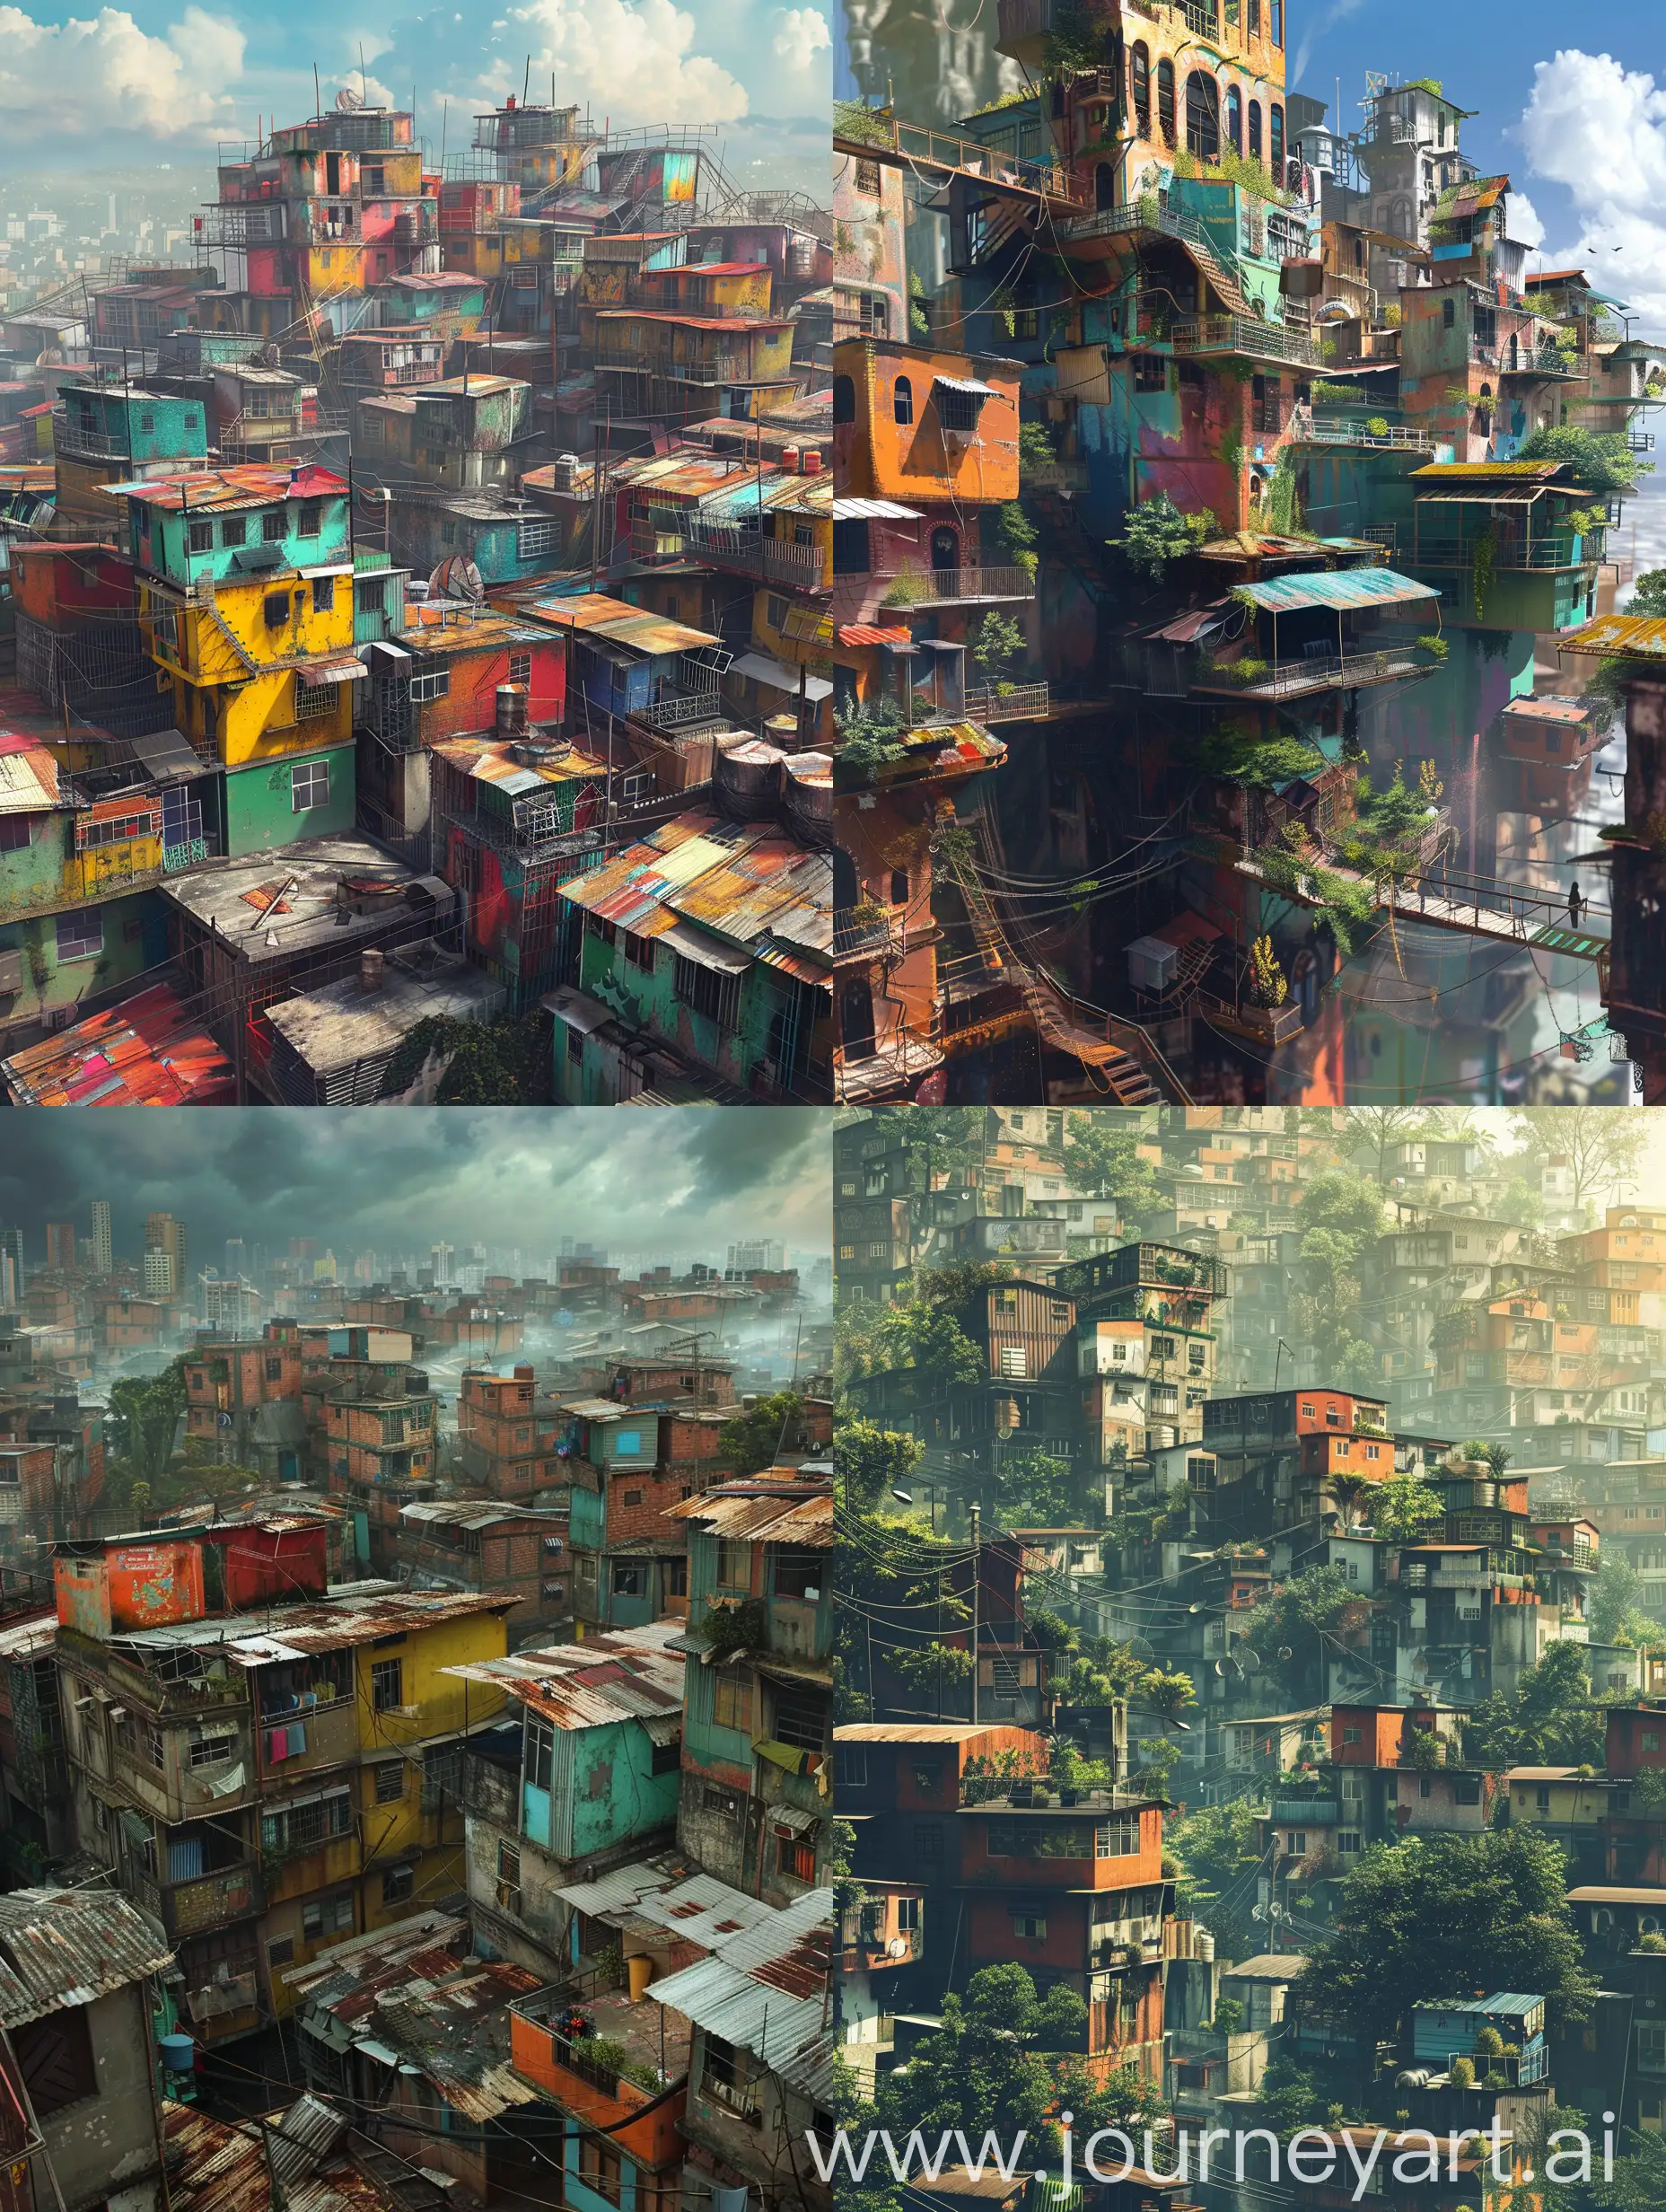 Fantasy-Slum-Neighborhoods-in-Cityscape-Vibrant-and-Evocative-Urban-Scenes